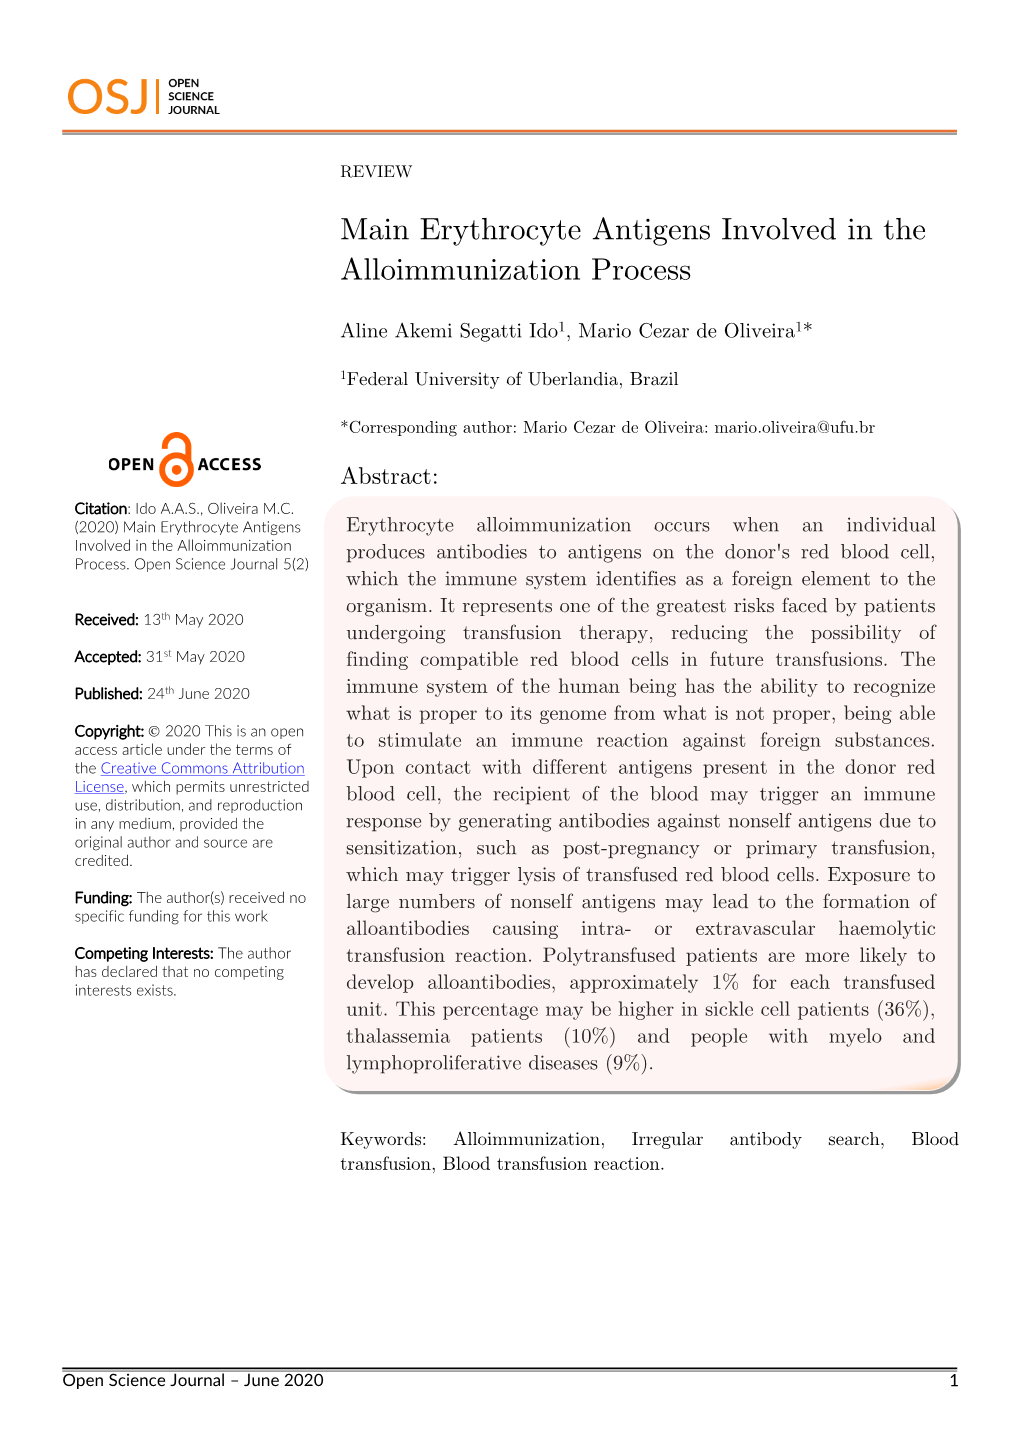 Main Erythrocyte Antigens Involved in the Alloimmunization Process